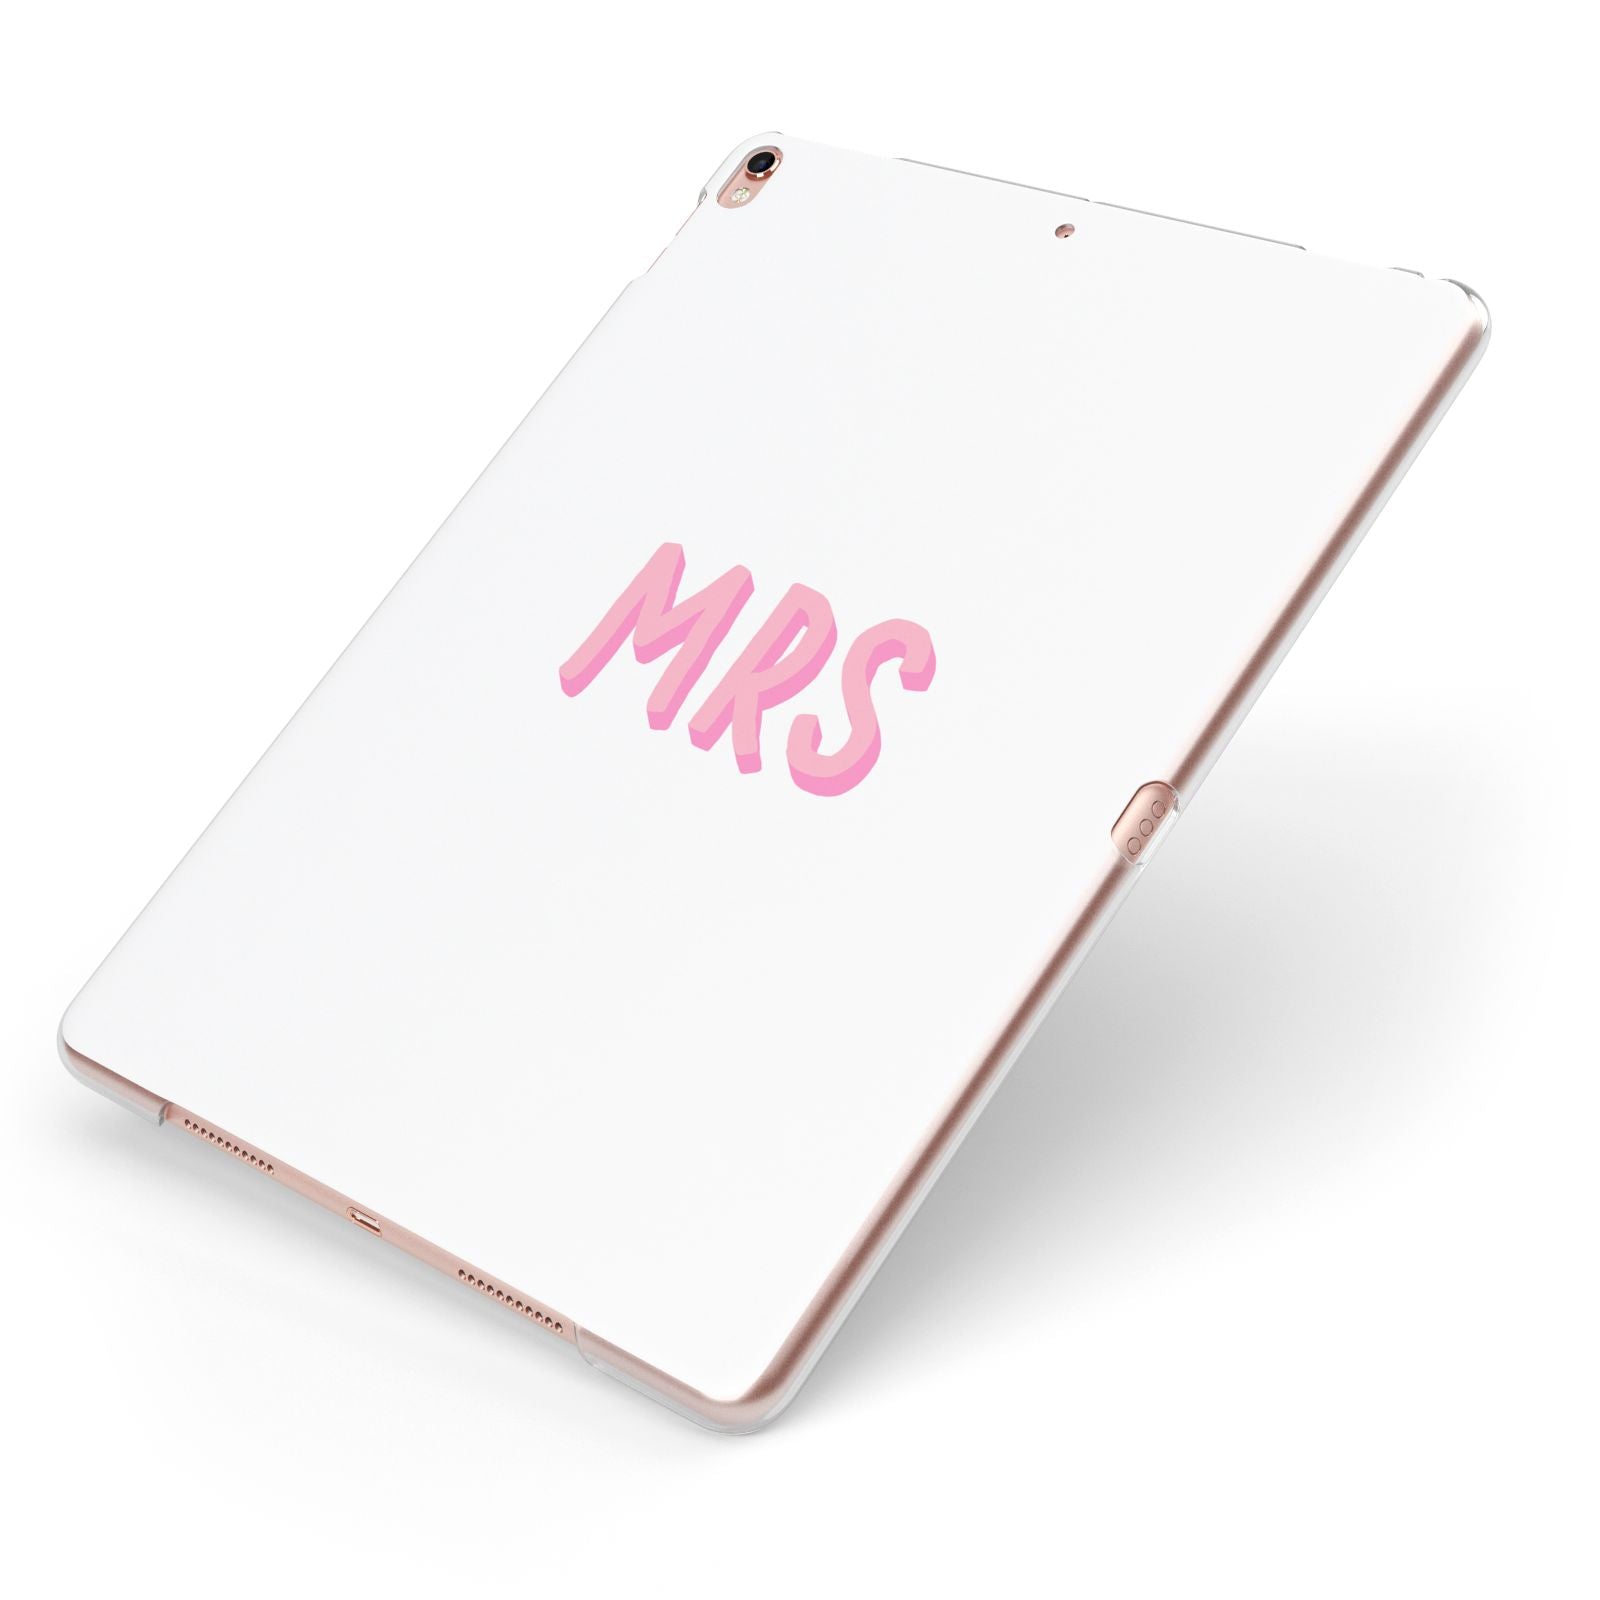 Mrs Apple iPad Case on Rose Gold iPad Side View